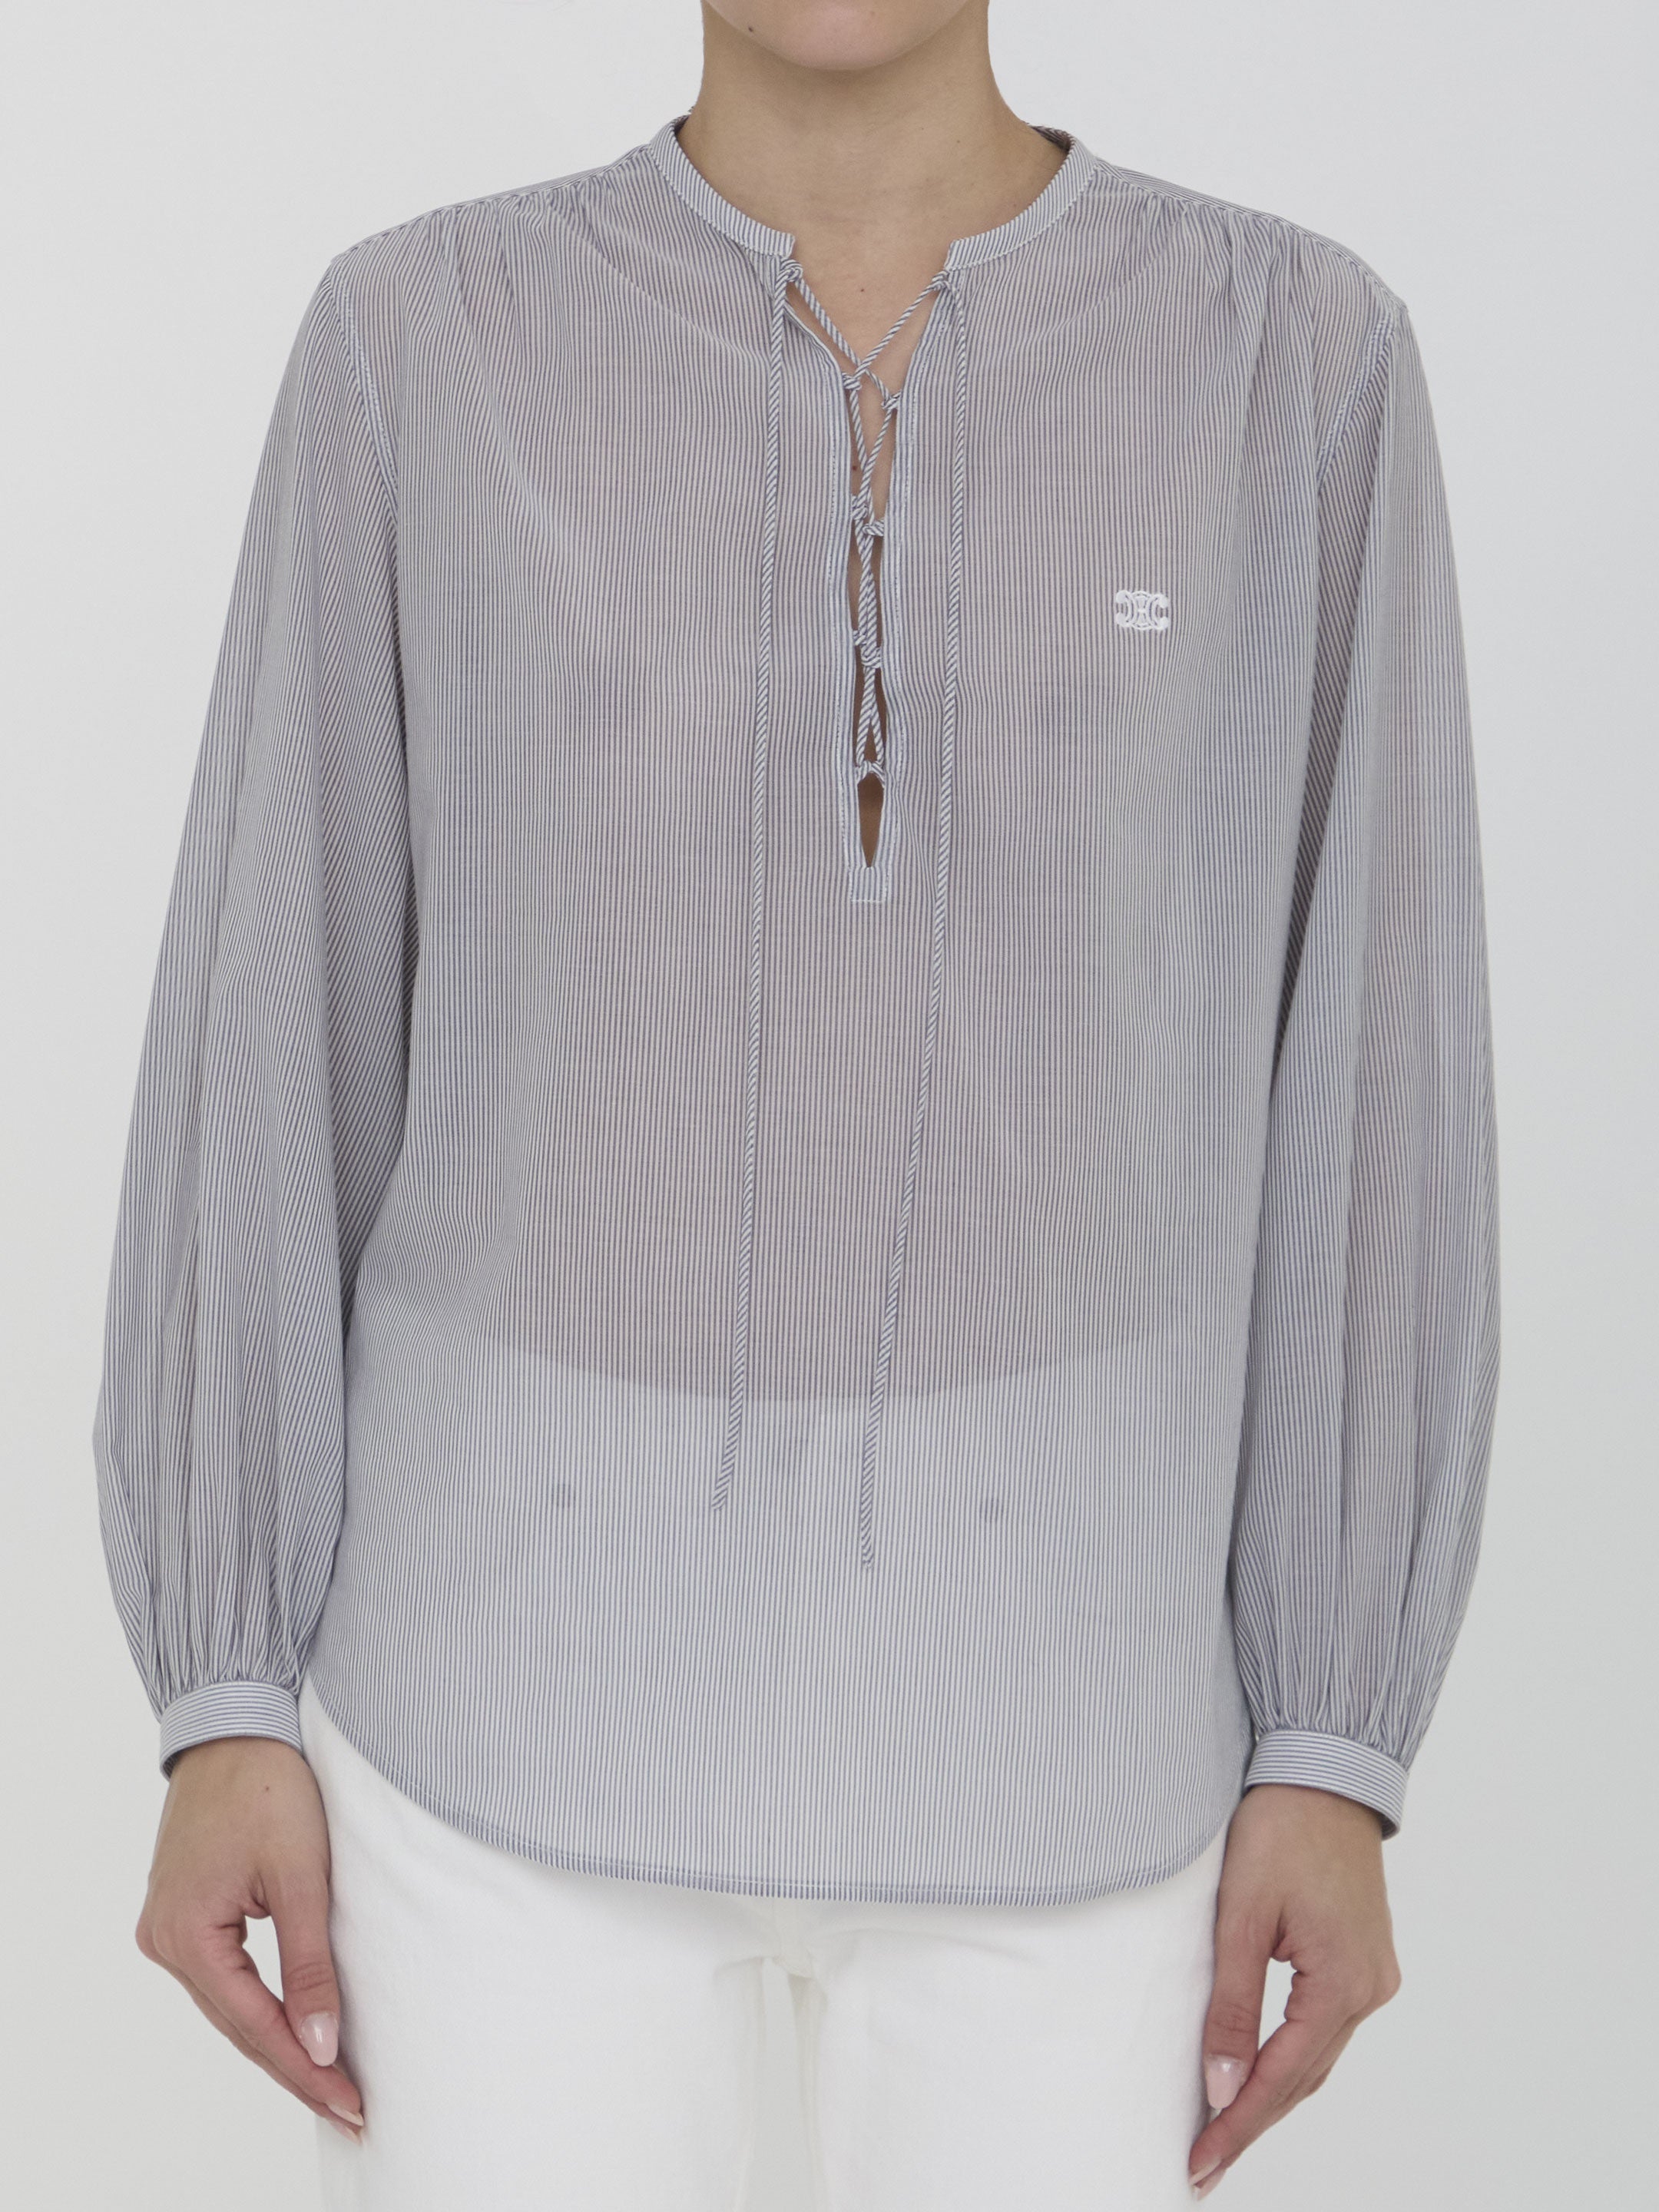 CELINE-OUTLET-SALE-Romy-blouse-Blusen-36-WHITE-ARCHIVE-COLLECTION.jpg